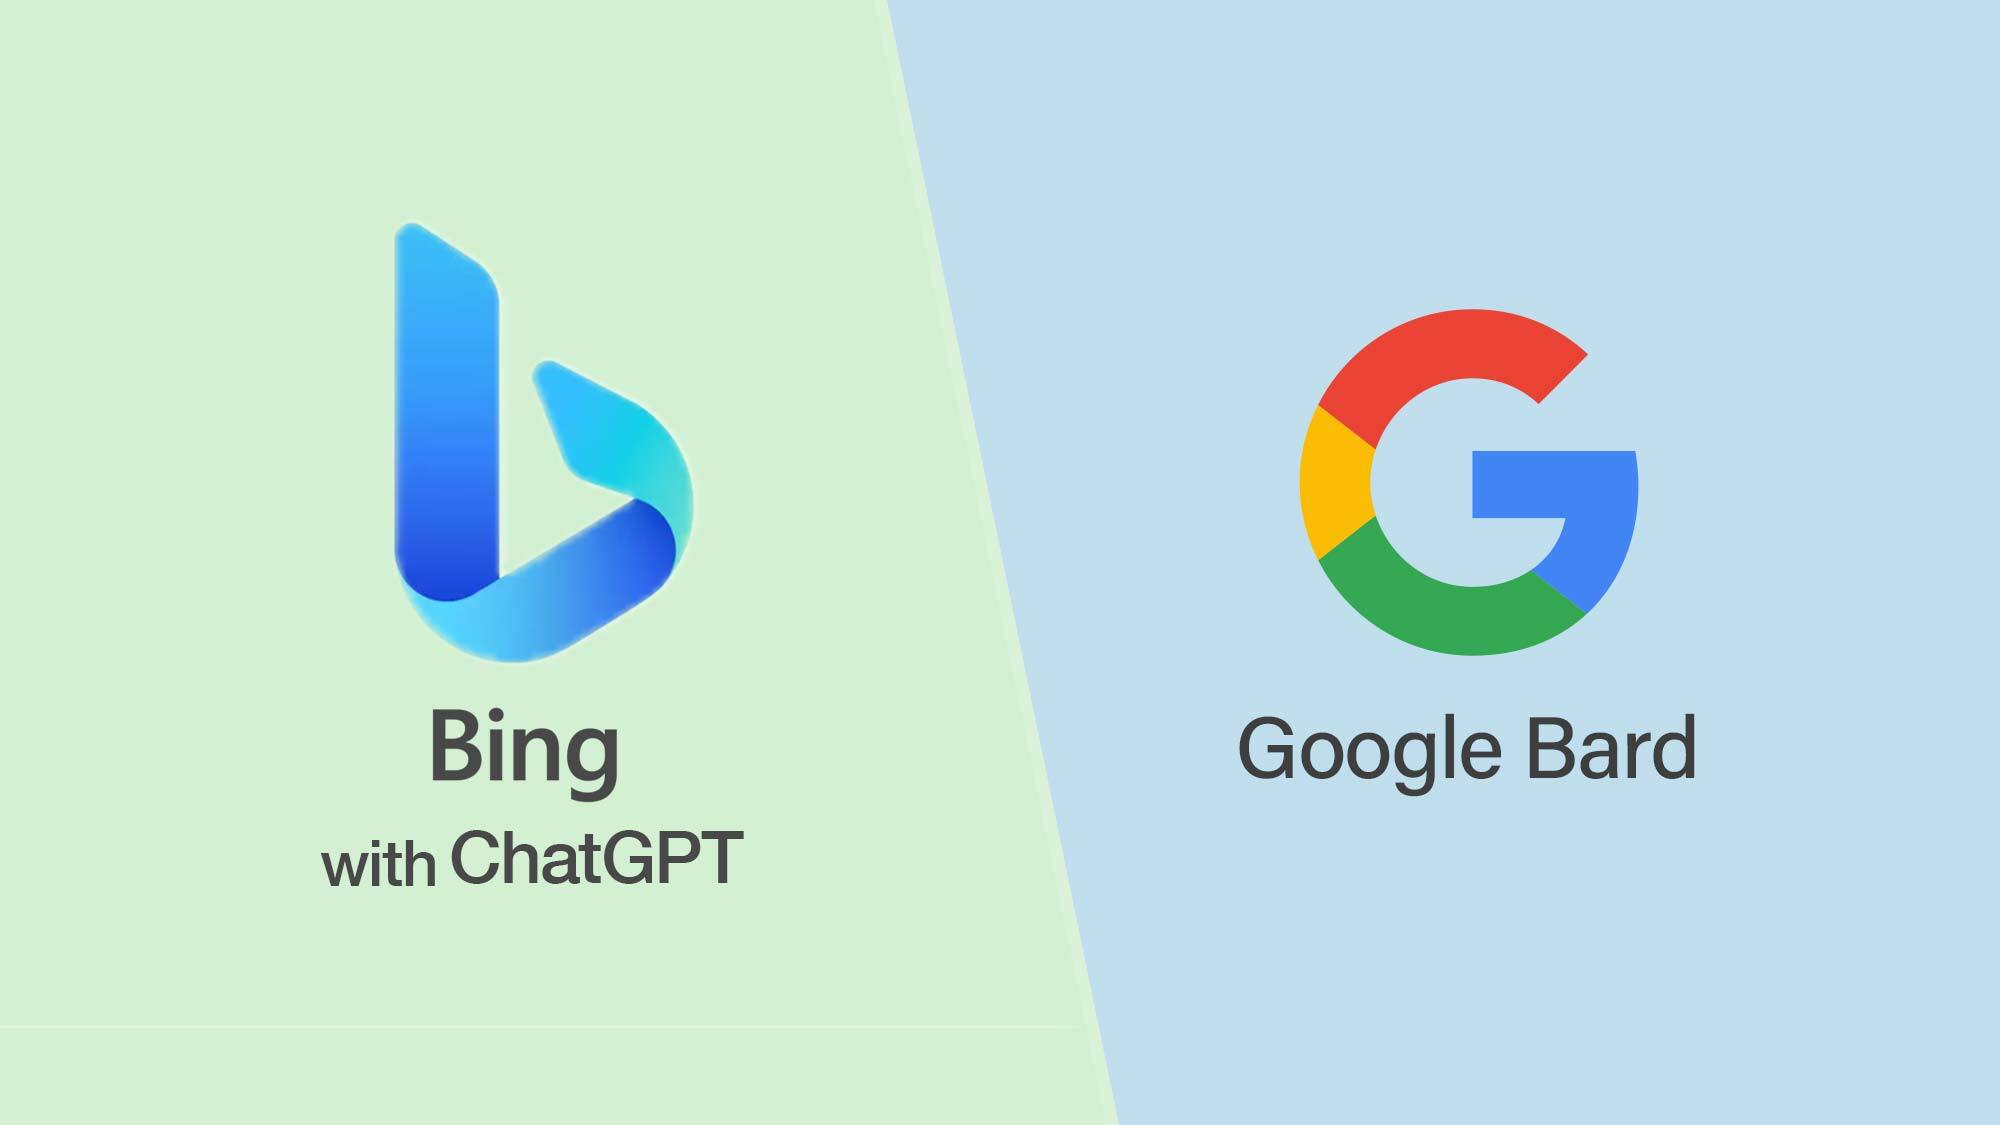 Bing avec ChatGPT vs Google Bard